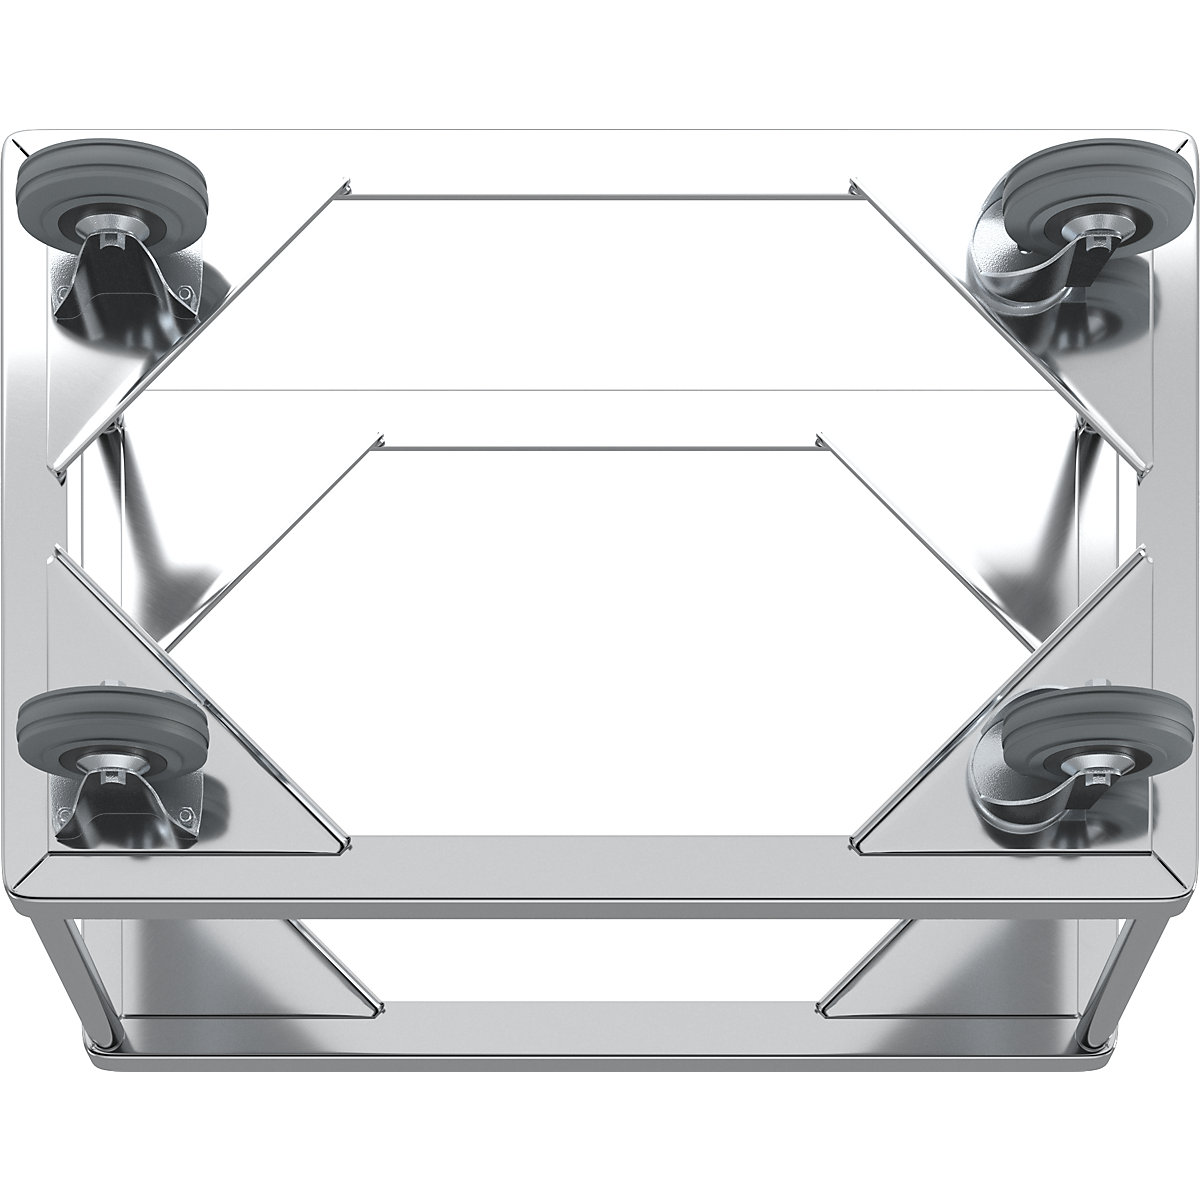 Aluminium onderwagen, laadhoogte 440 mm – Gmöhling (Productafbeelding 2)-1